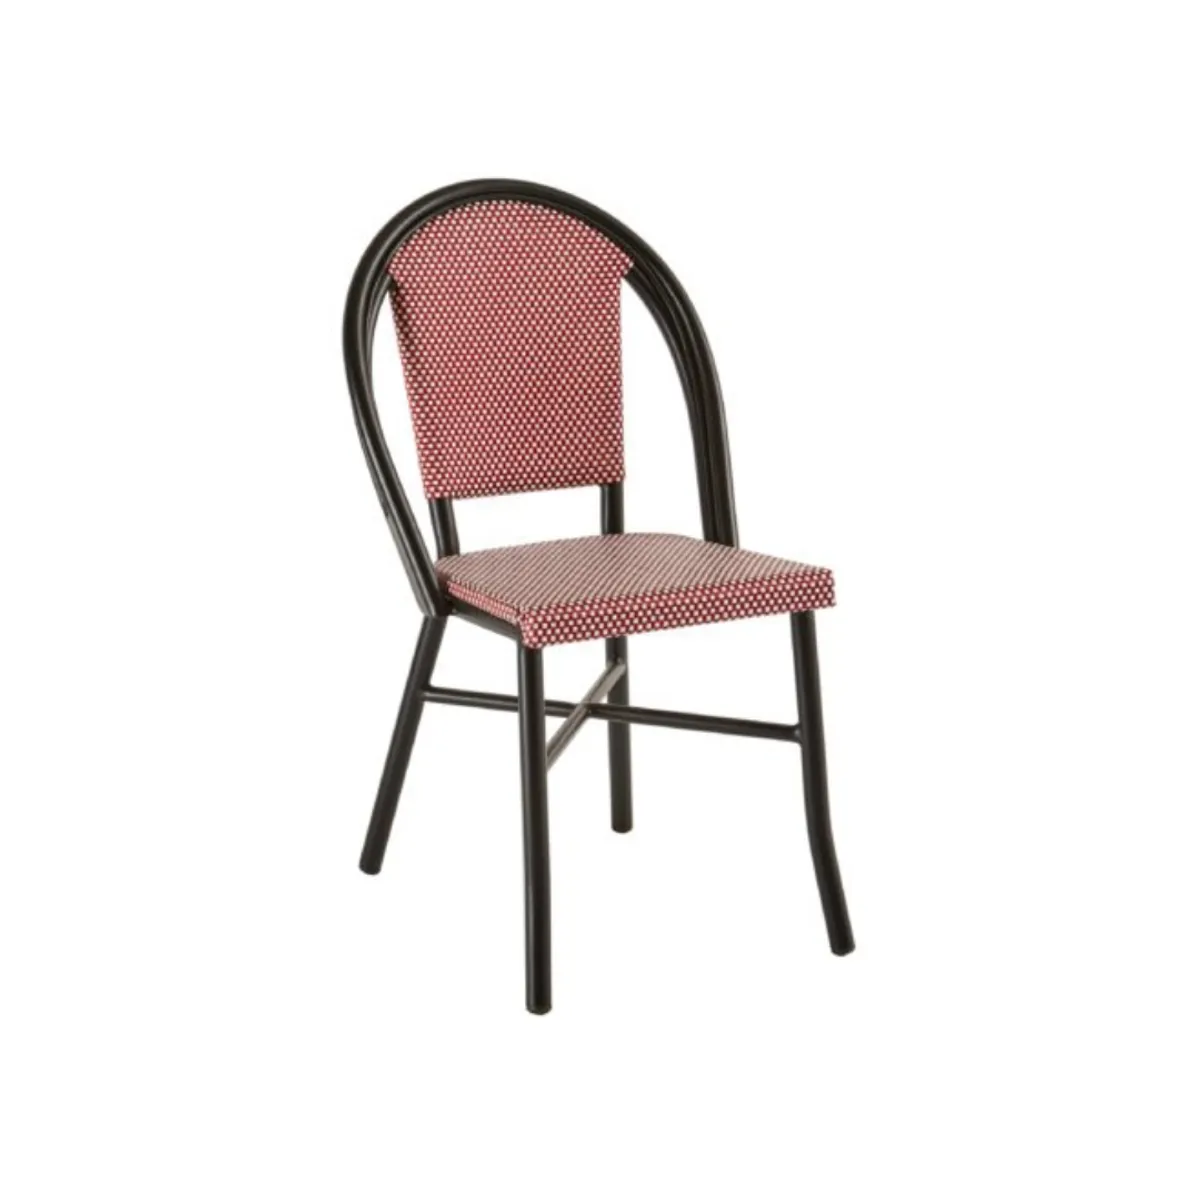 Cahill side chair 1